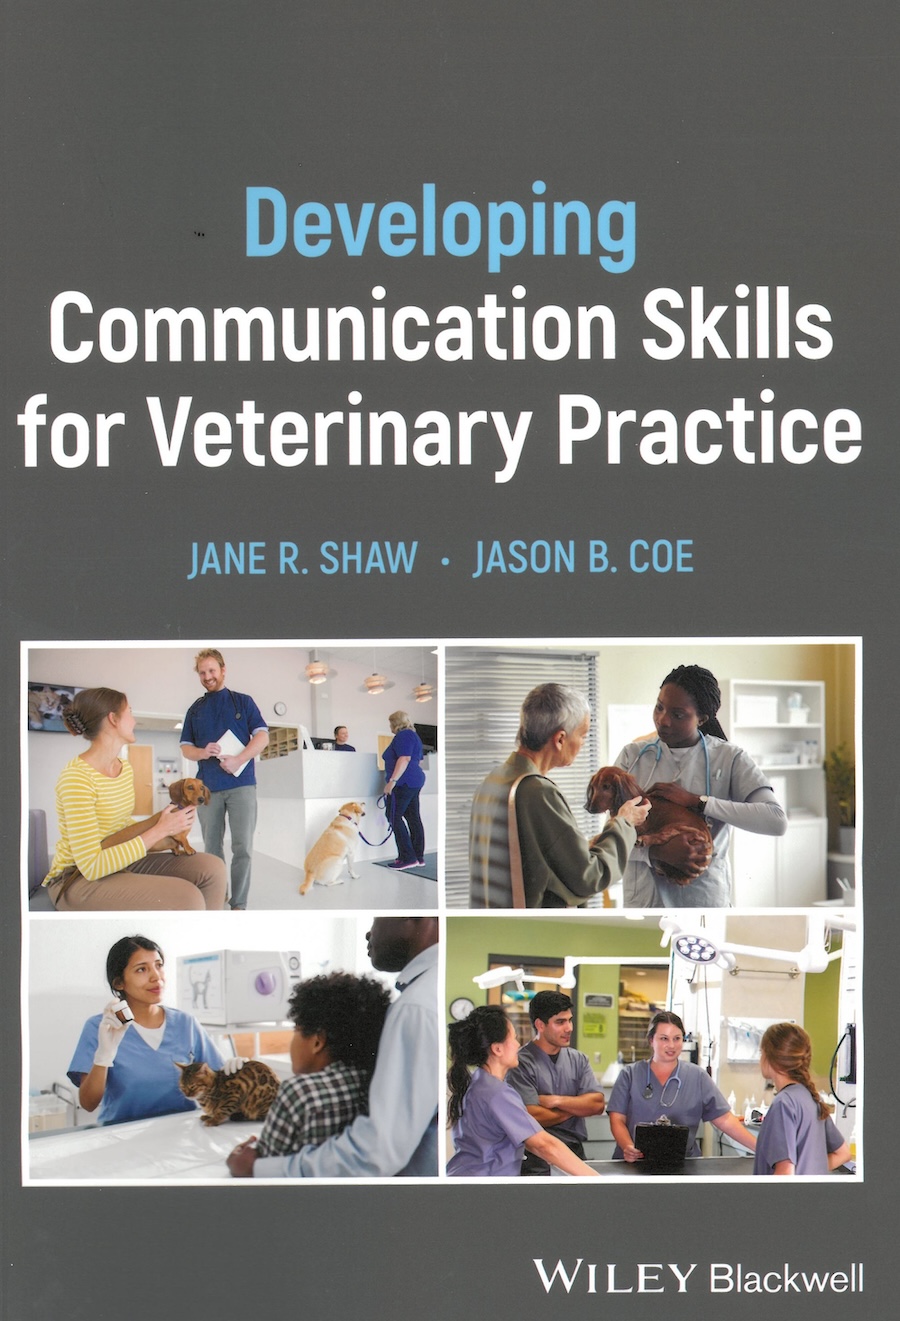 Developing communication skills for veterinary practice